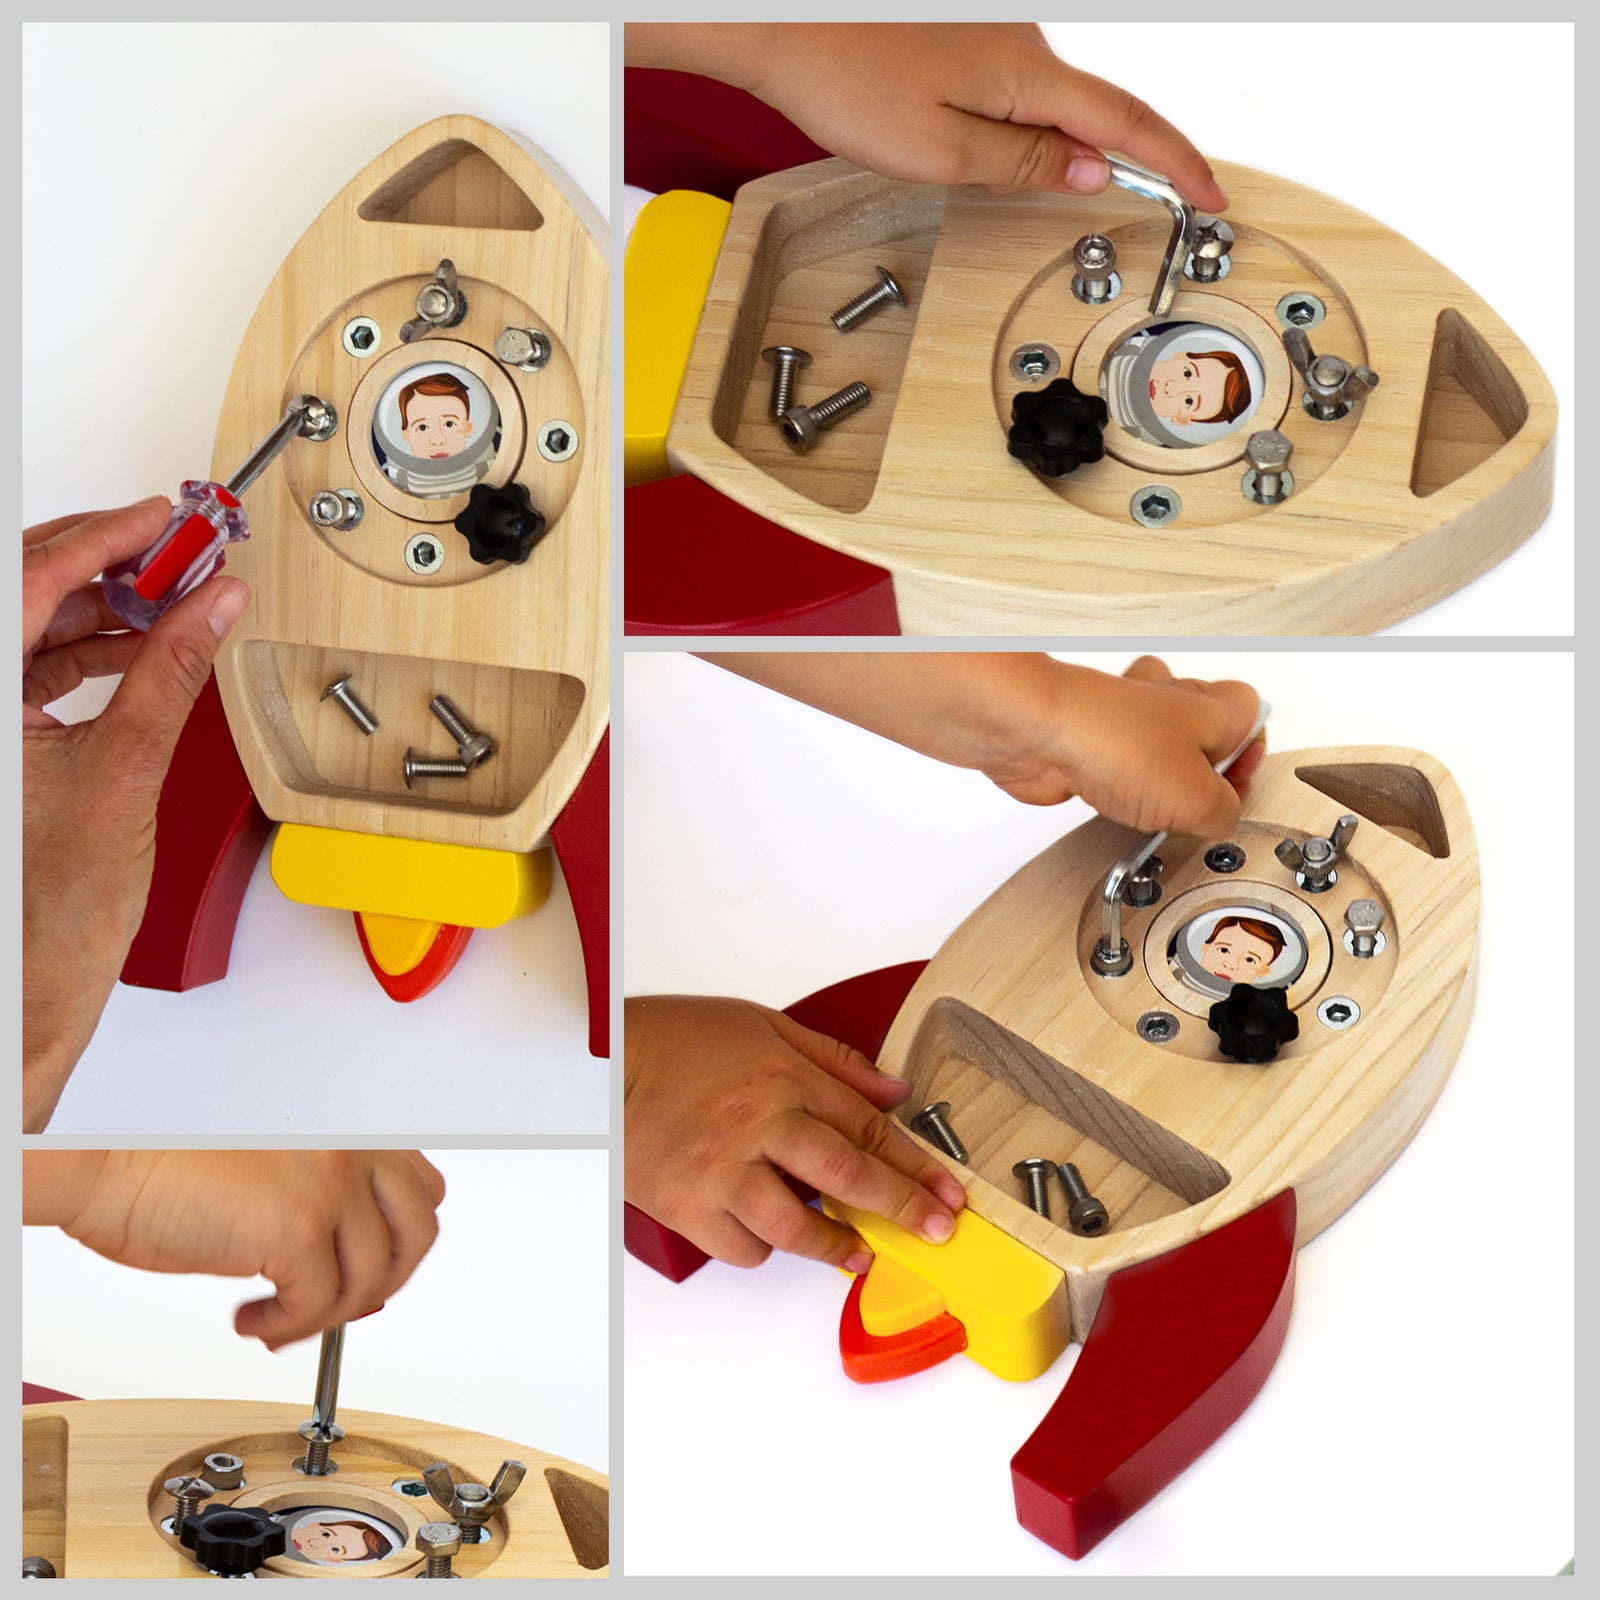 Montessori Screw Driver Board, Rocket Ship Toy Wooden Kids Busy Board Sensory Toy - Axel Adventures